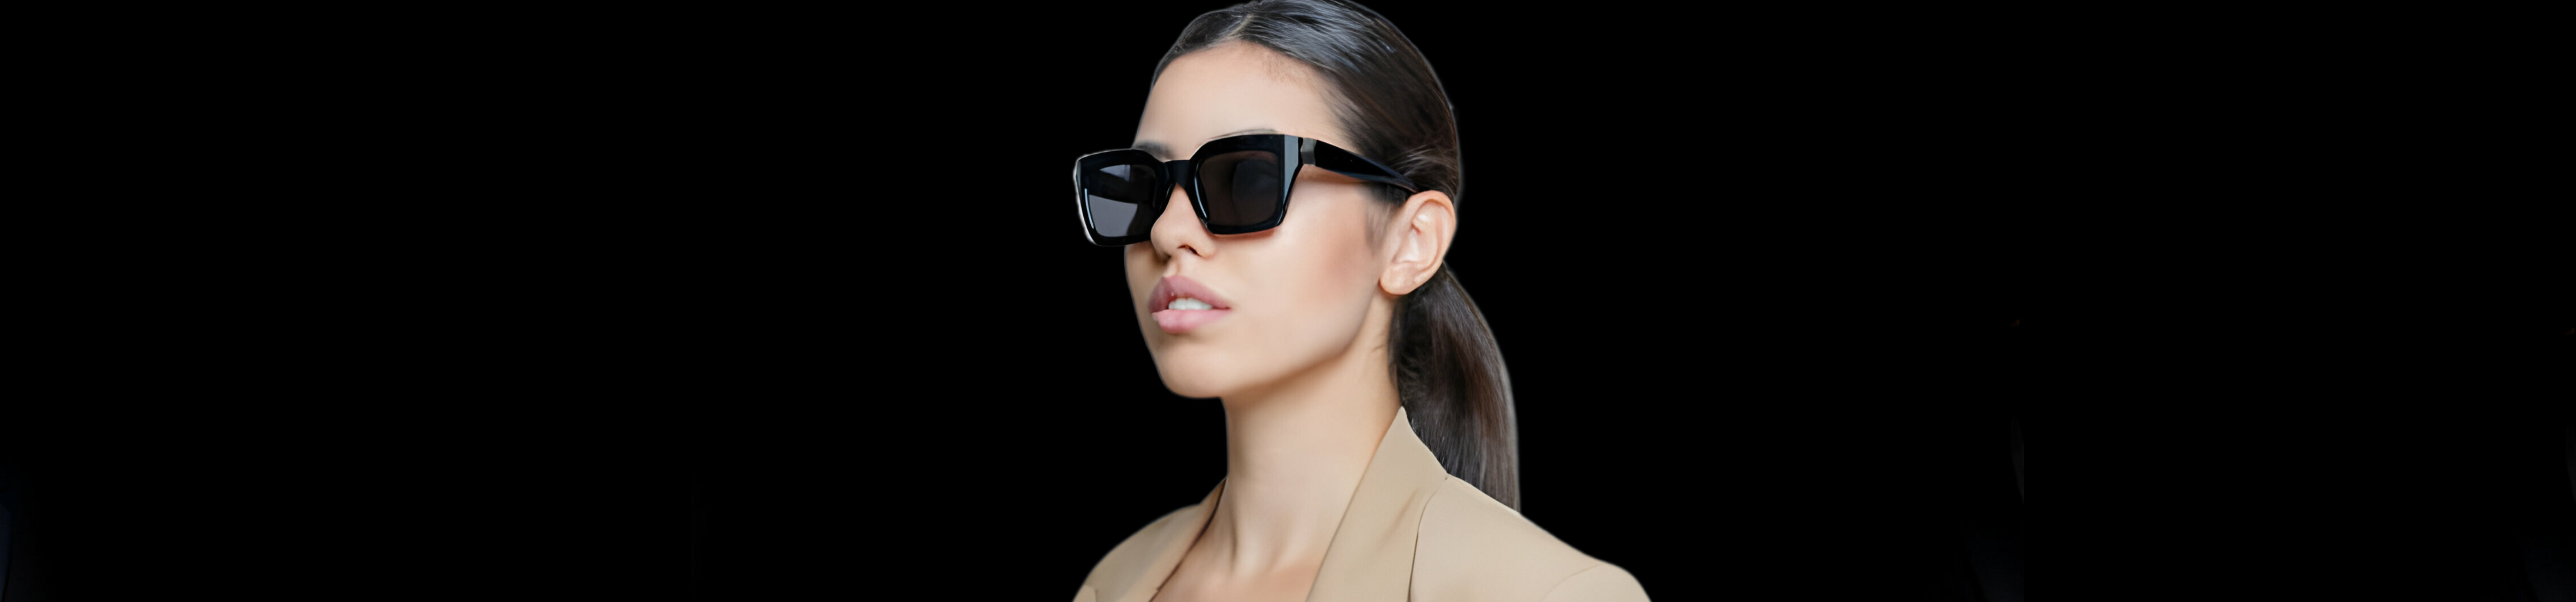 TR90 frames sunglasses Missandtrendy